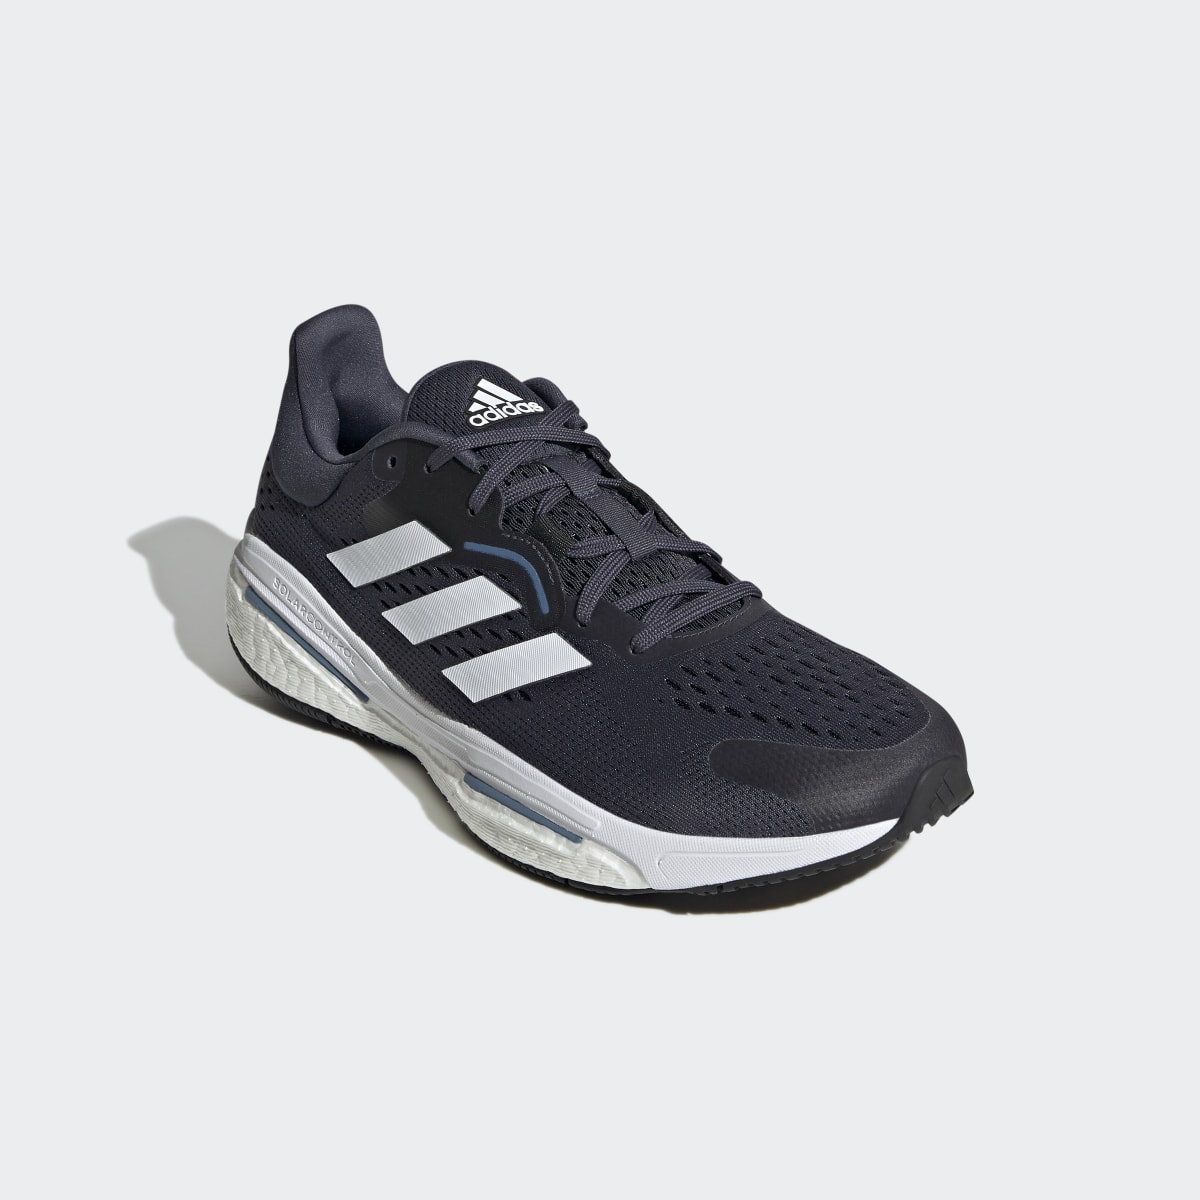 Adidas Solarcontrol Running Shoes. 5